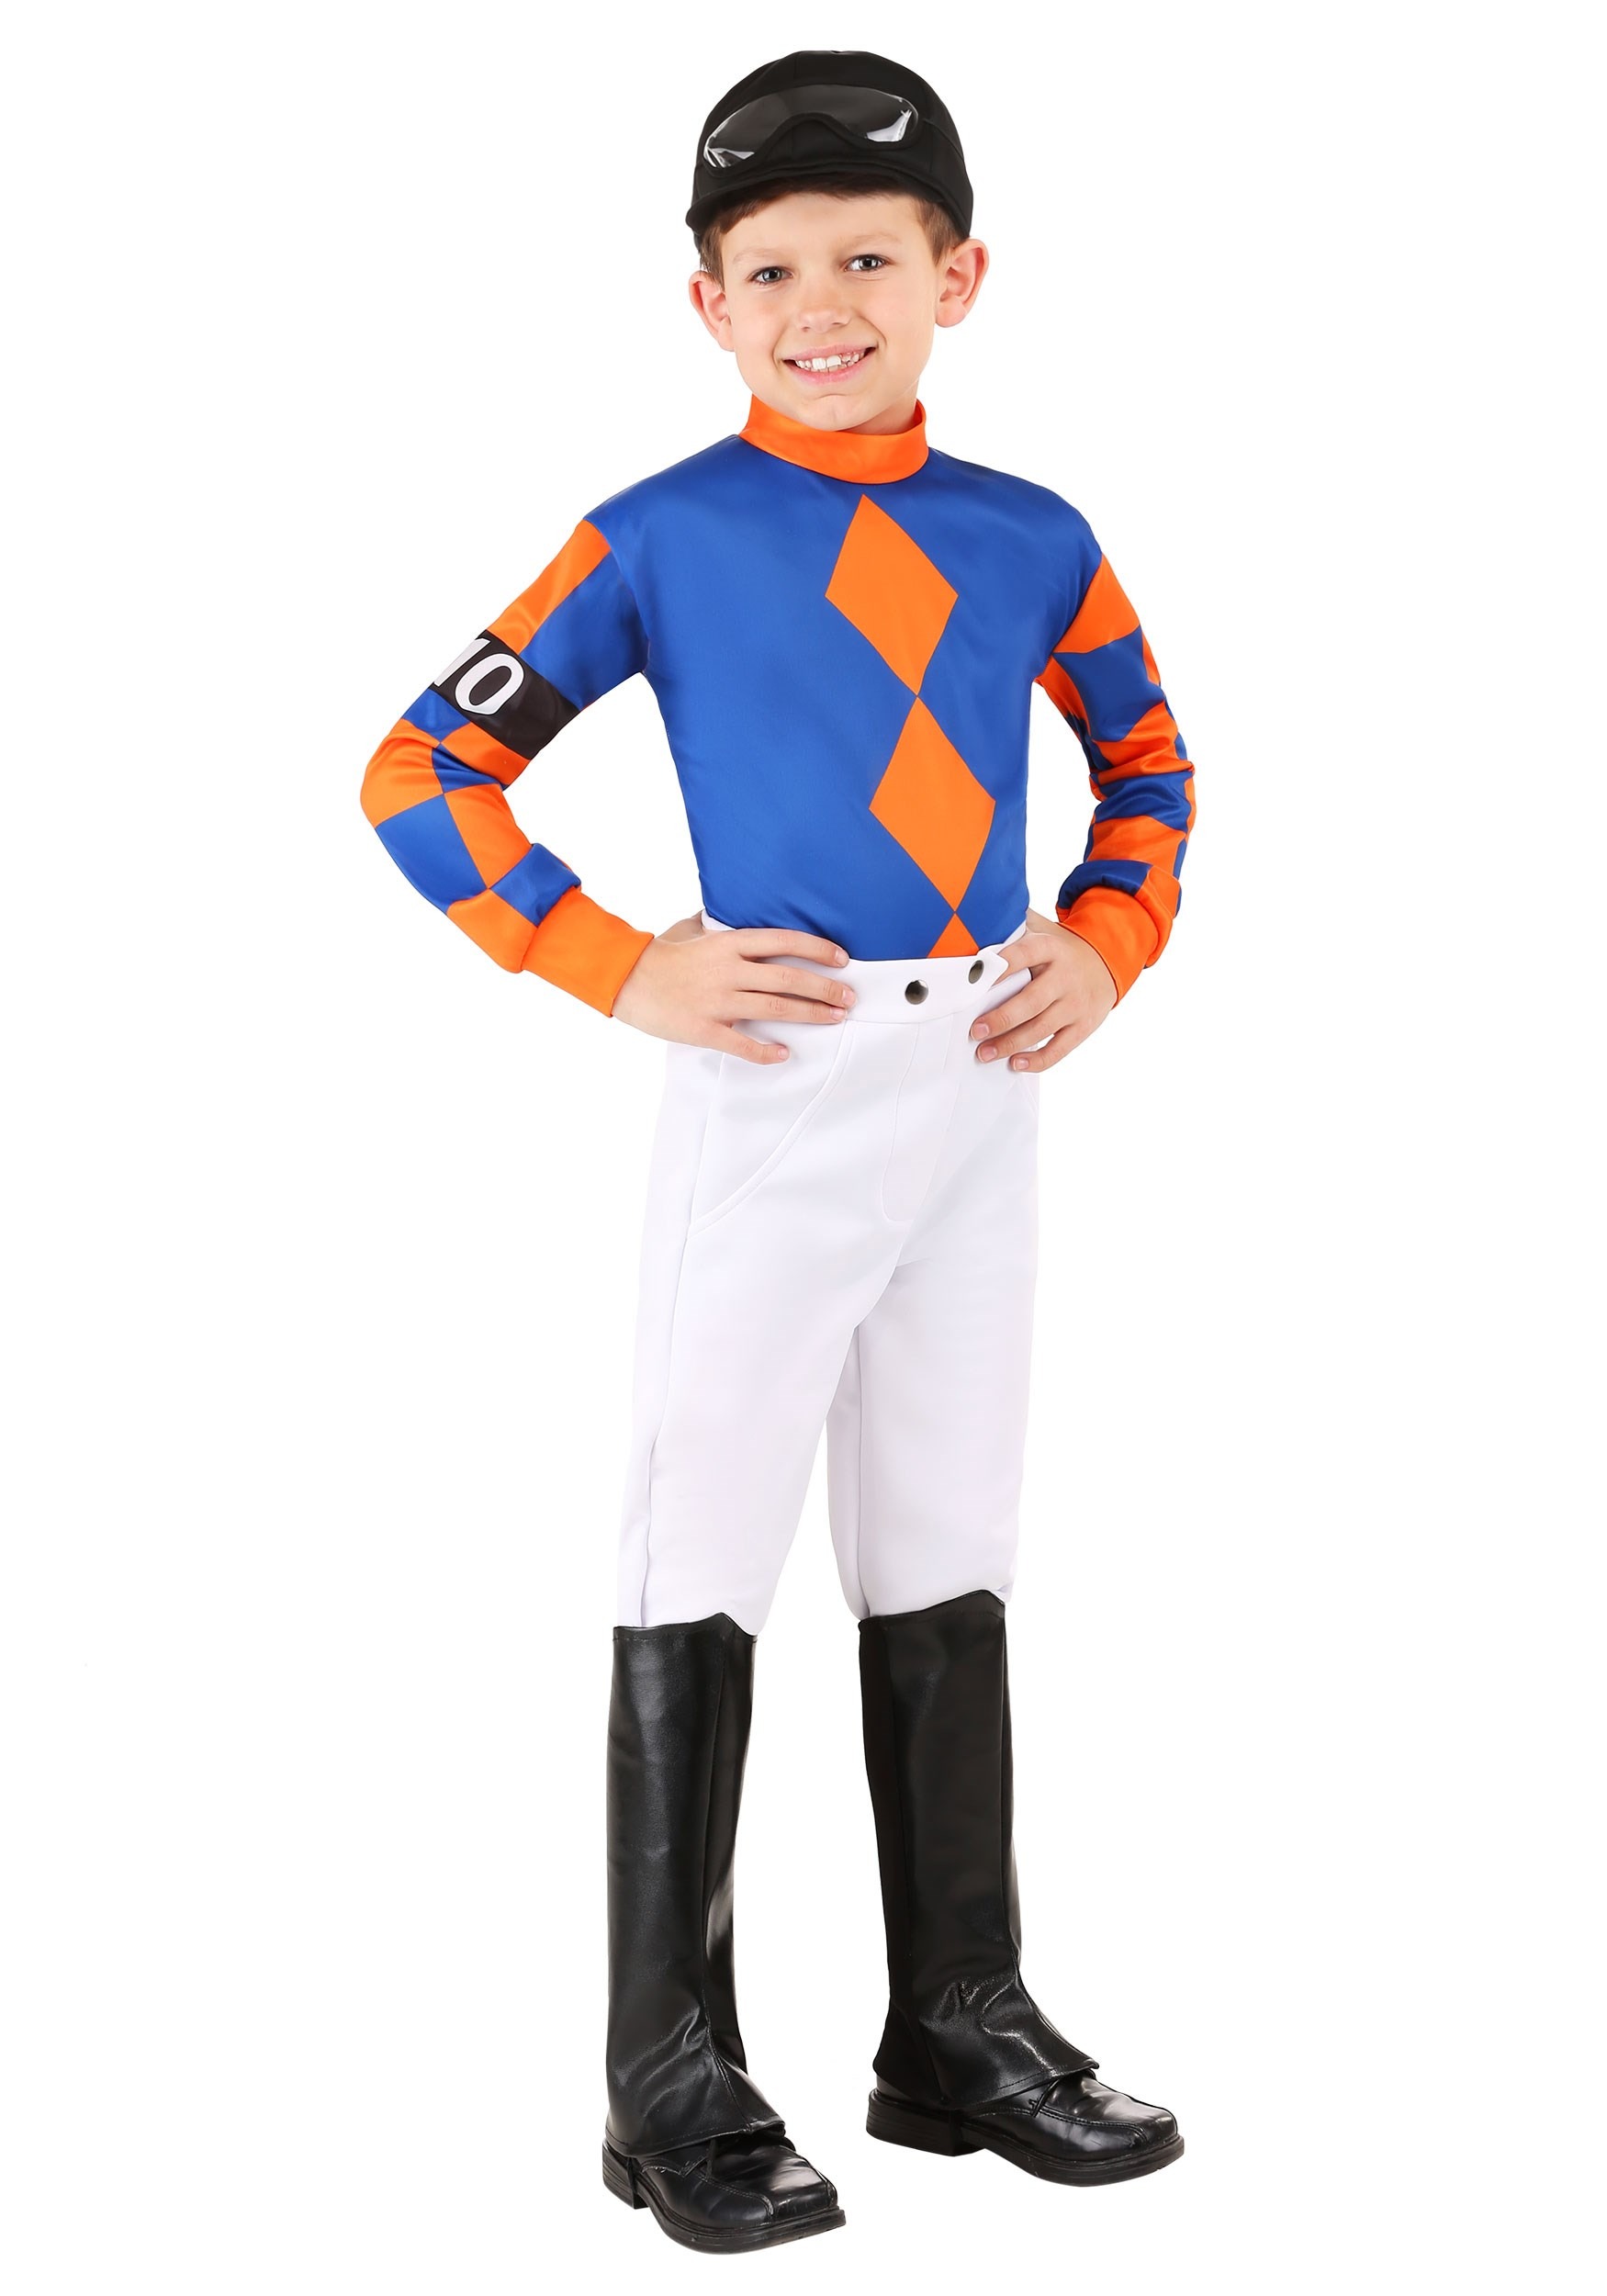 Photos - Fancy Dress Derby FUN Costumes  Jockey Costume for Boy's Blue/Orange/White FUN0 